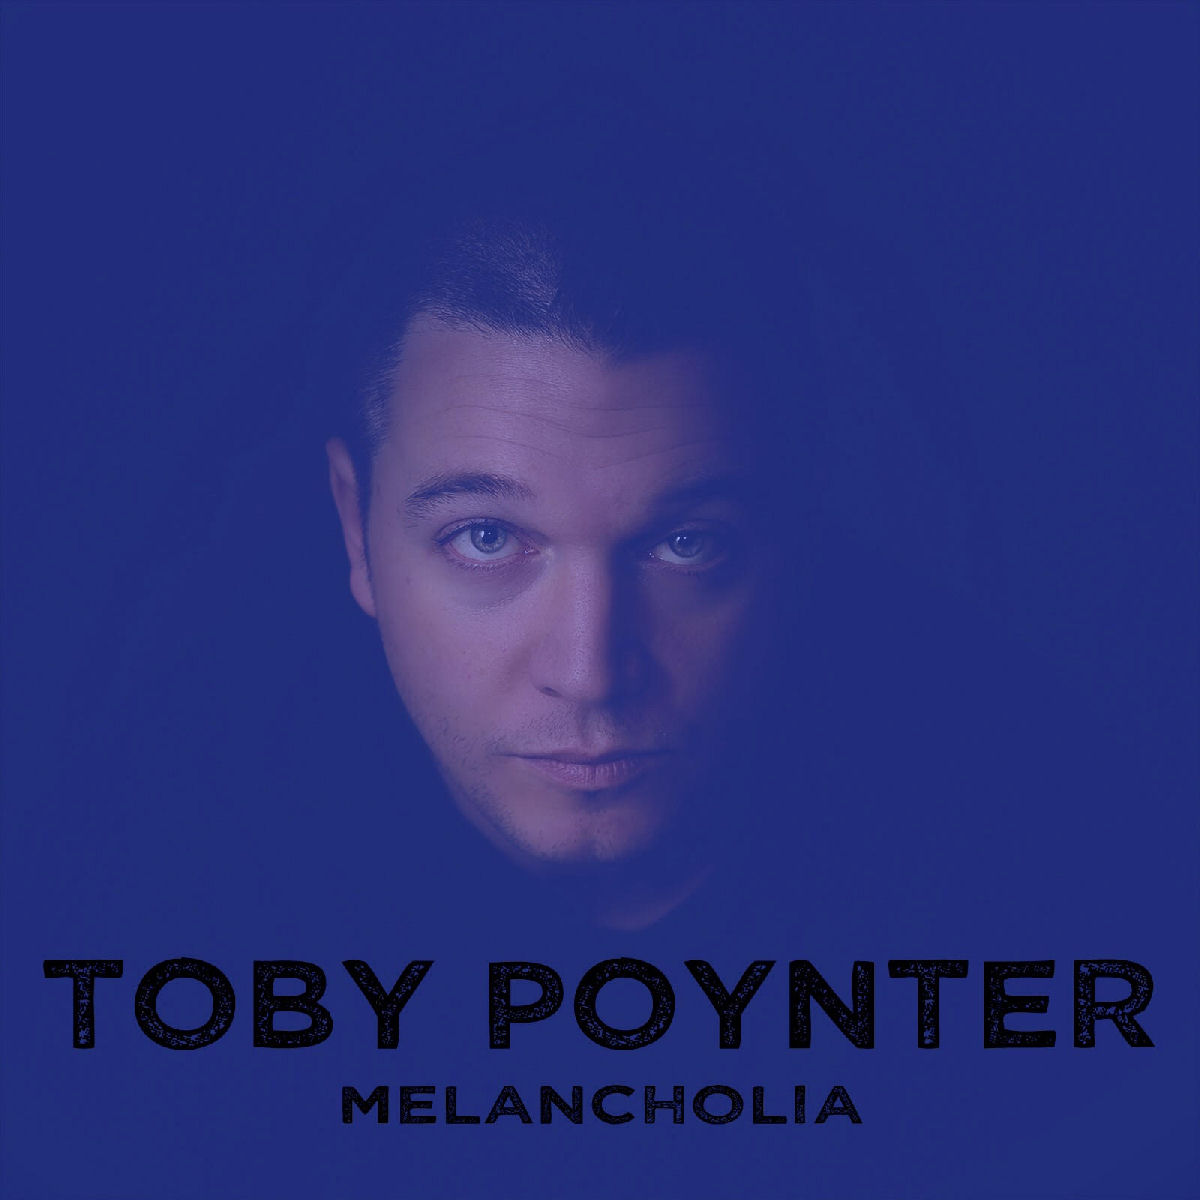  Toby Poynter – “Melancholia”